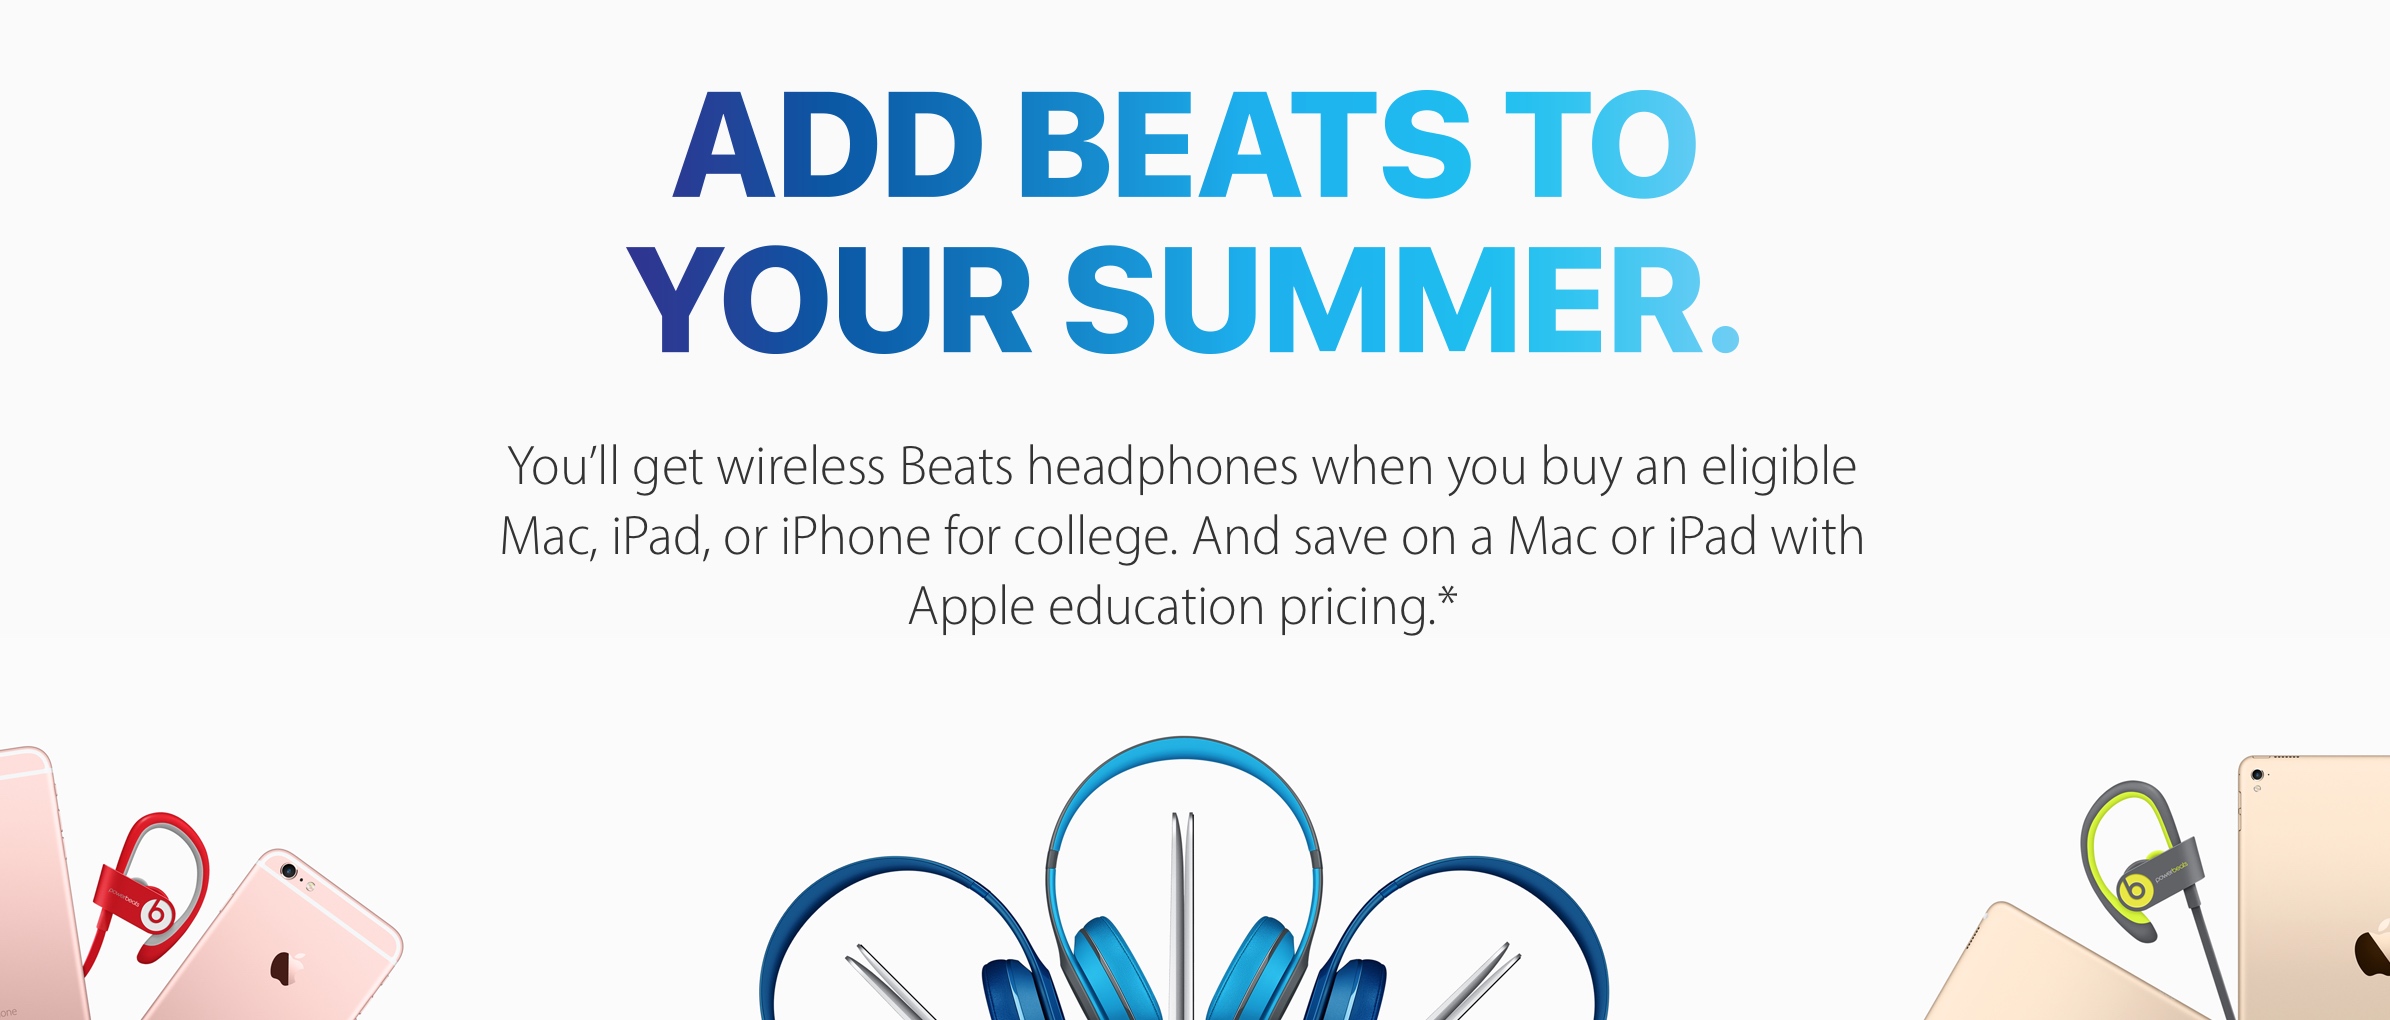 ipad with beats deal